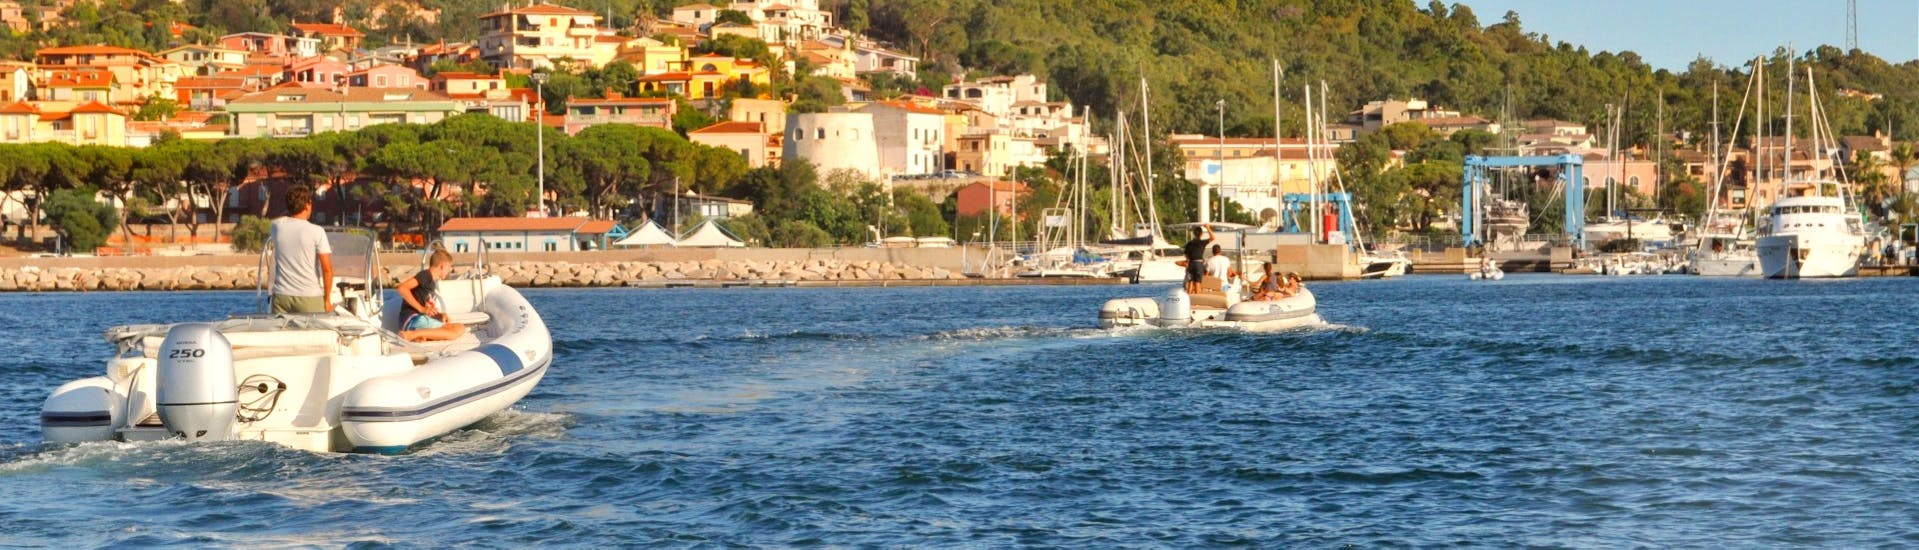 Dos lanchas neumáticas de Velamare Arbatax navegando frente a la costa.